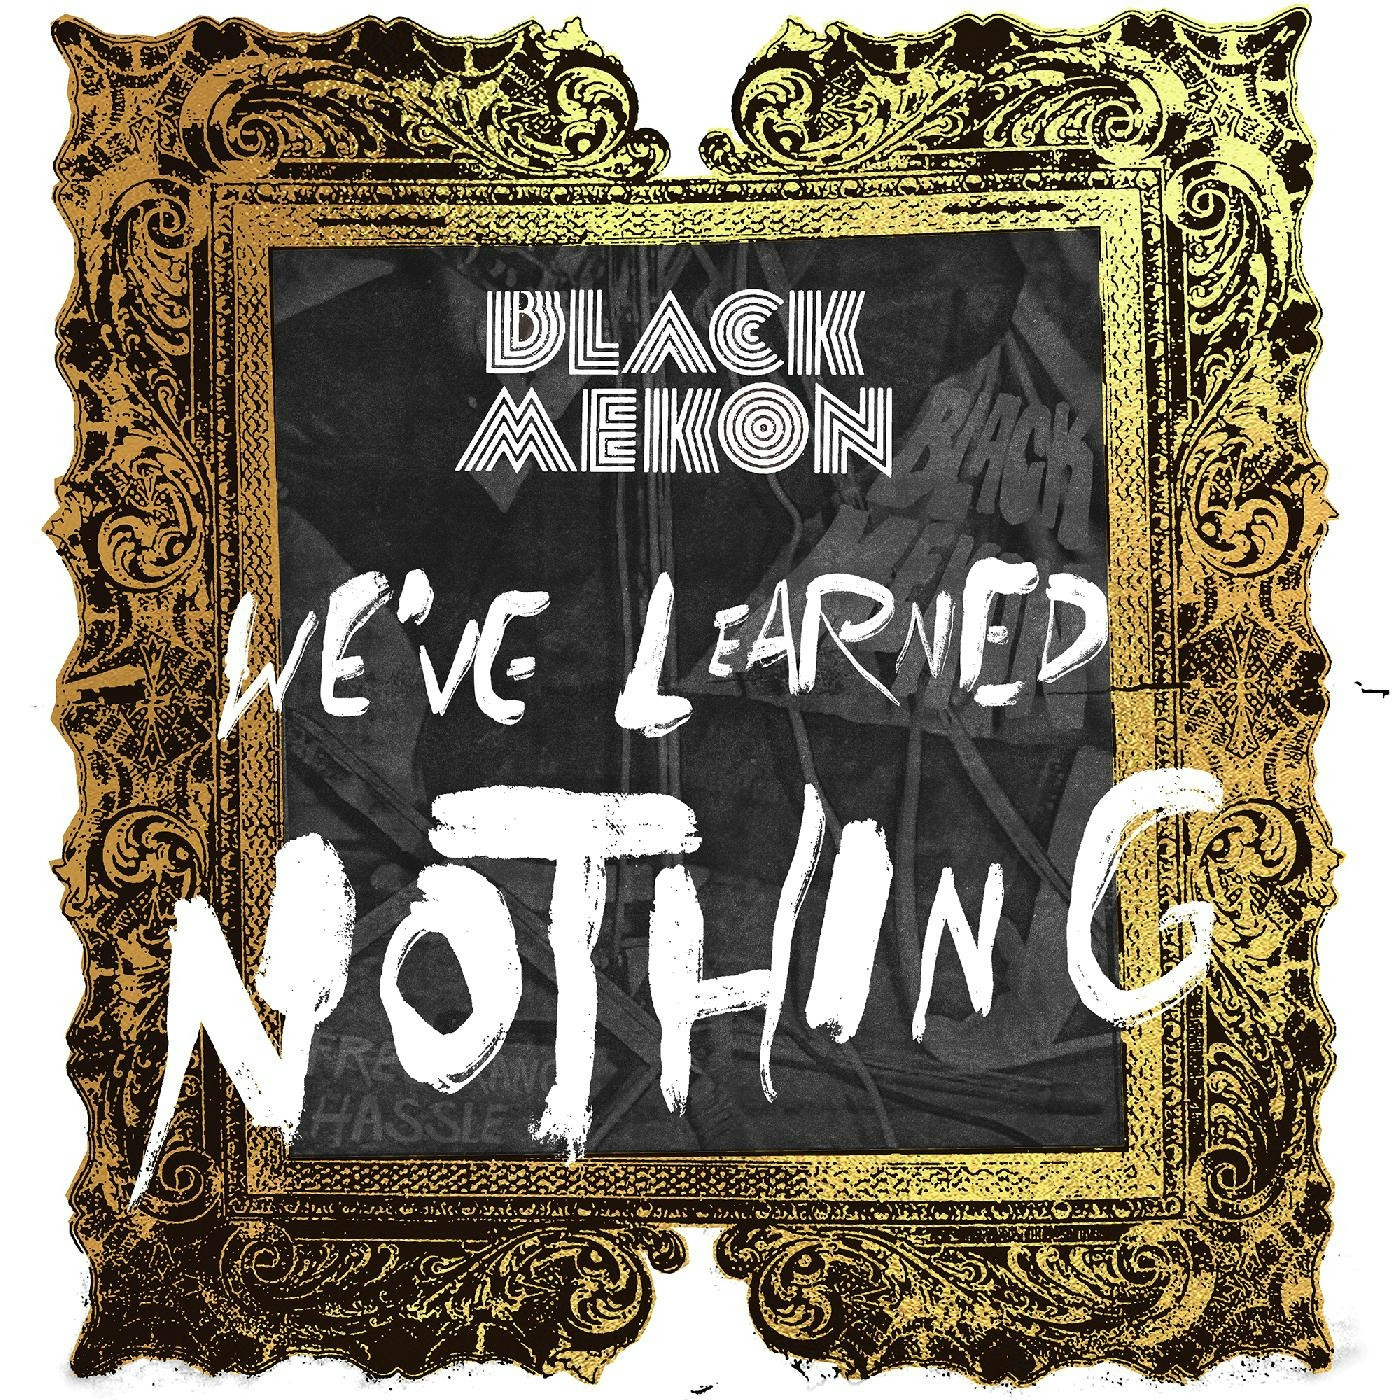 Album artwork for Album artwork for We've Learned Nothing by Black Mekon by We've Learned Nothing - Black Mekon